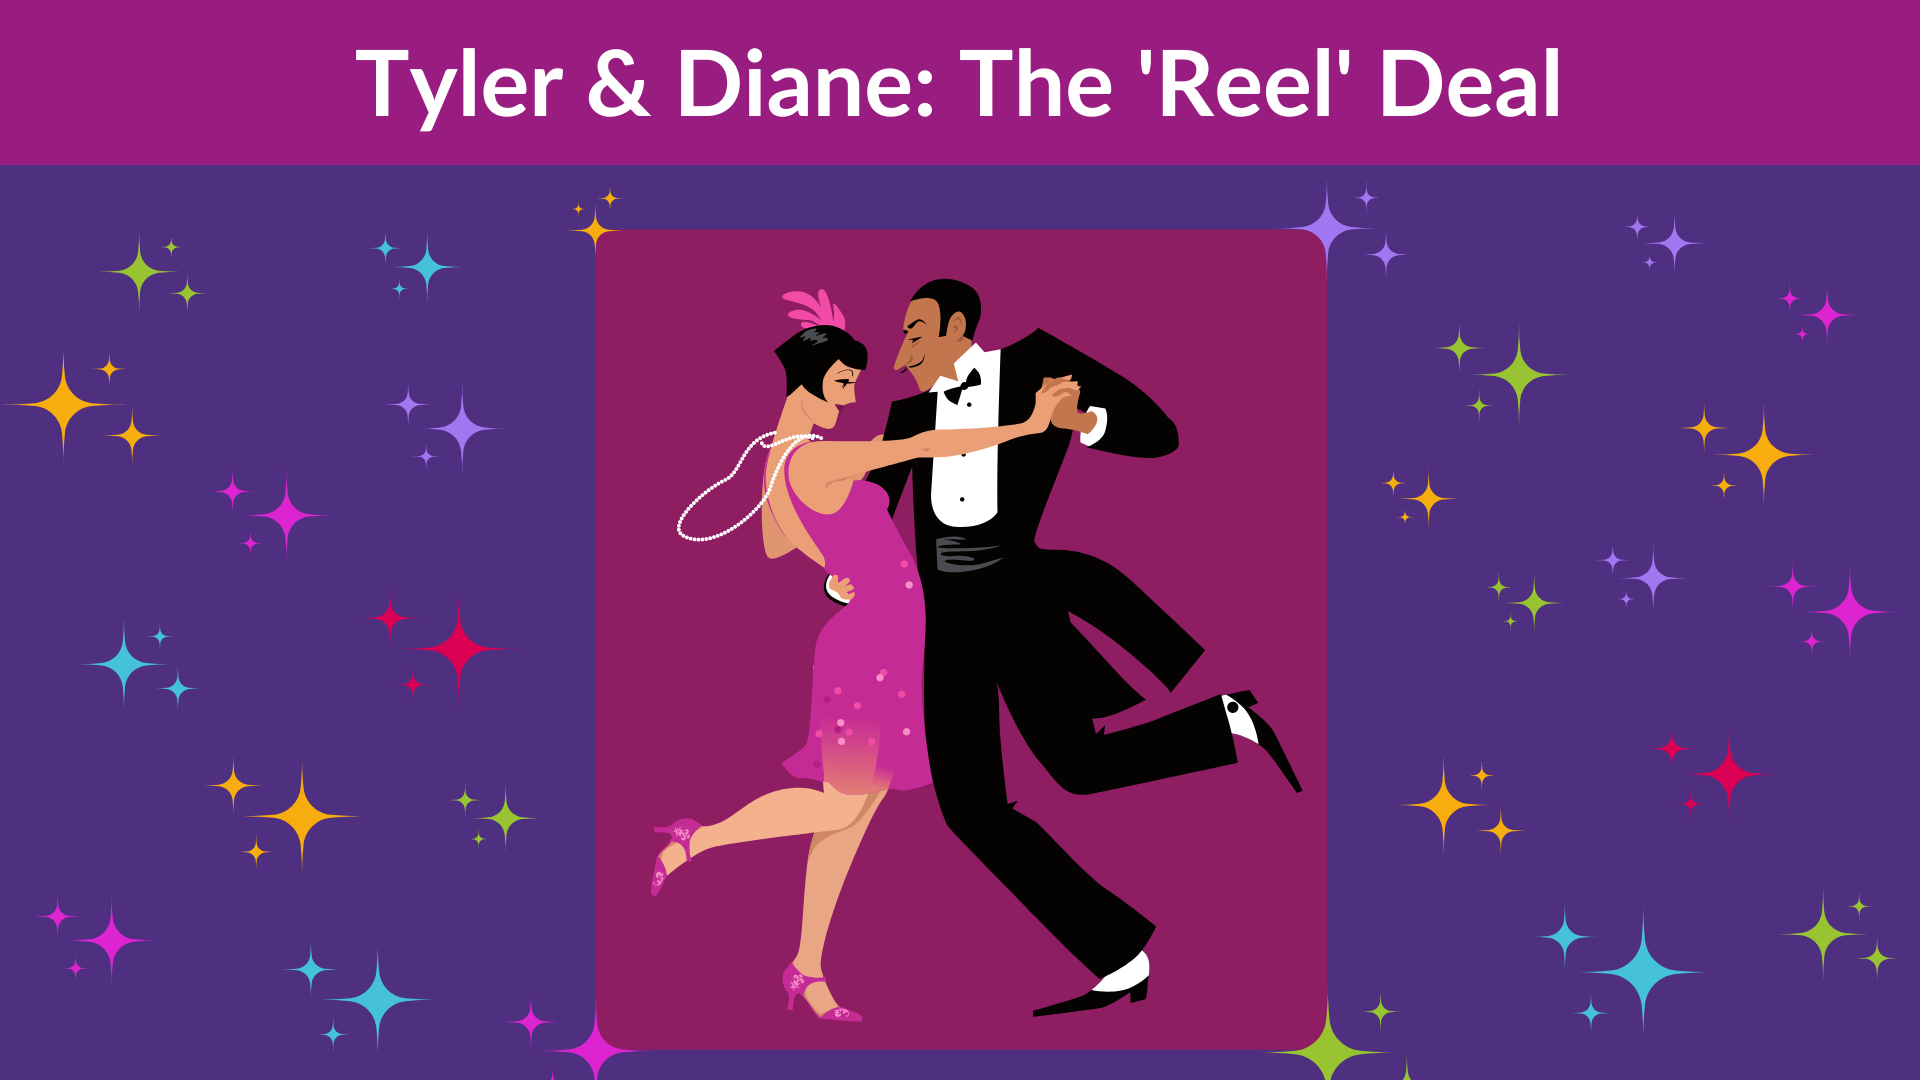 Graphic: A ballroom dancing couple doing a Charleston